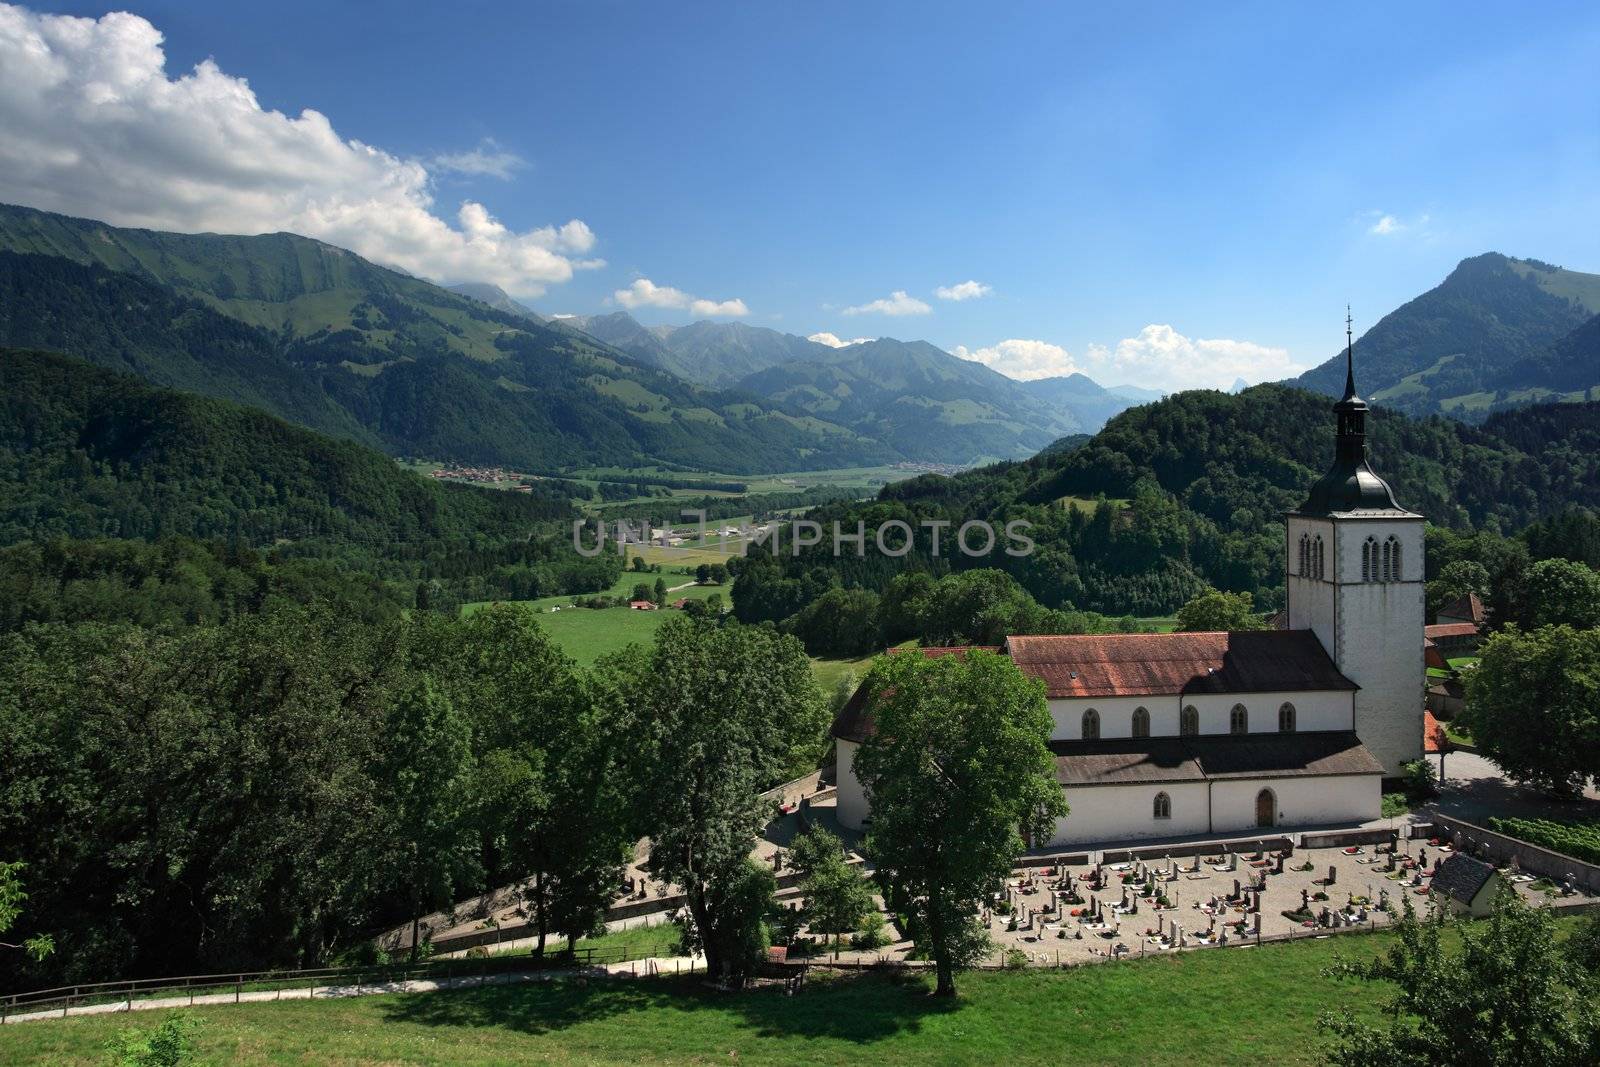 Photo of the church and cemetery in Gruyeres Switzerland.